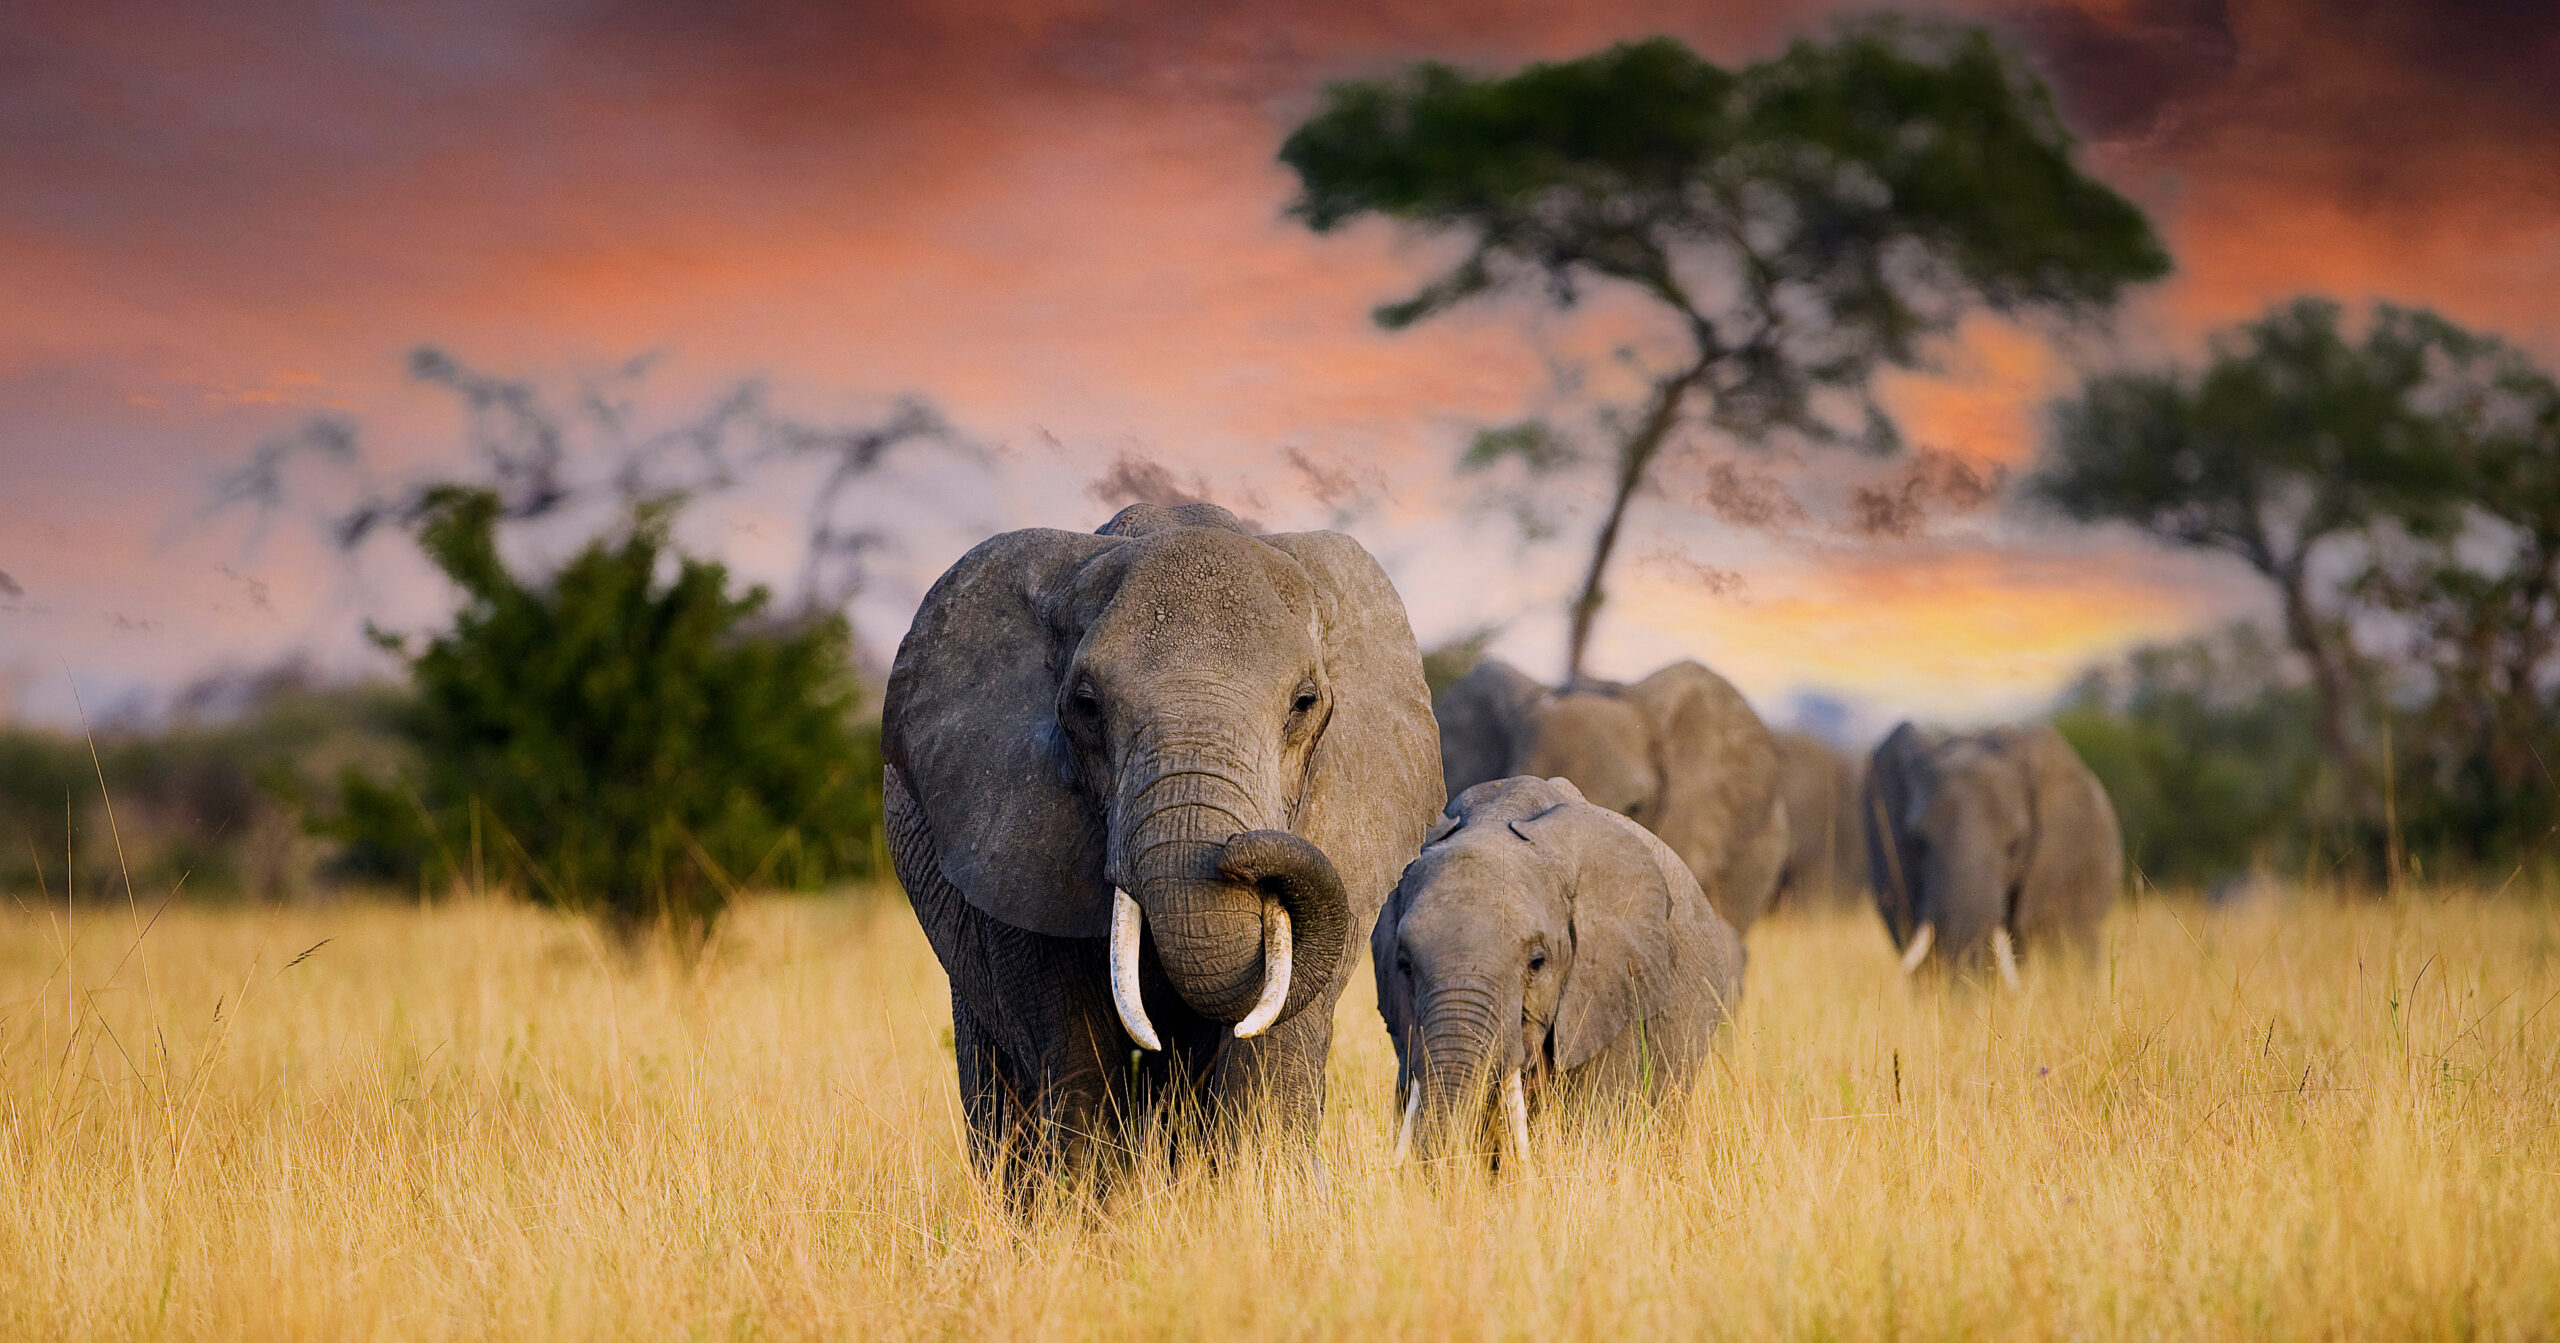 A herd of wild elephants walk through the savanna